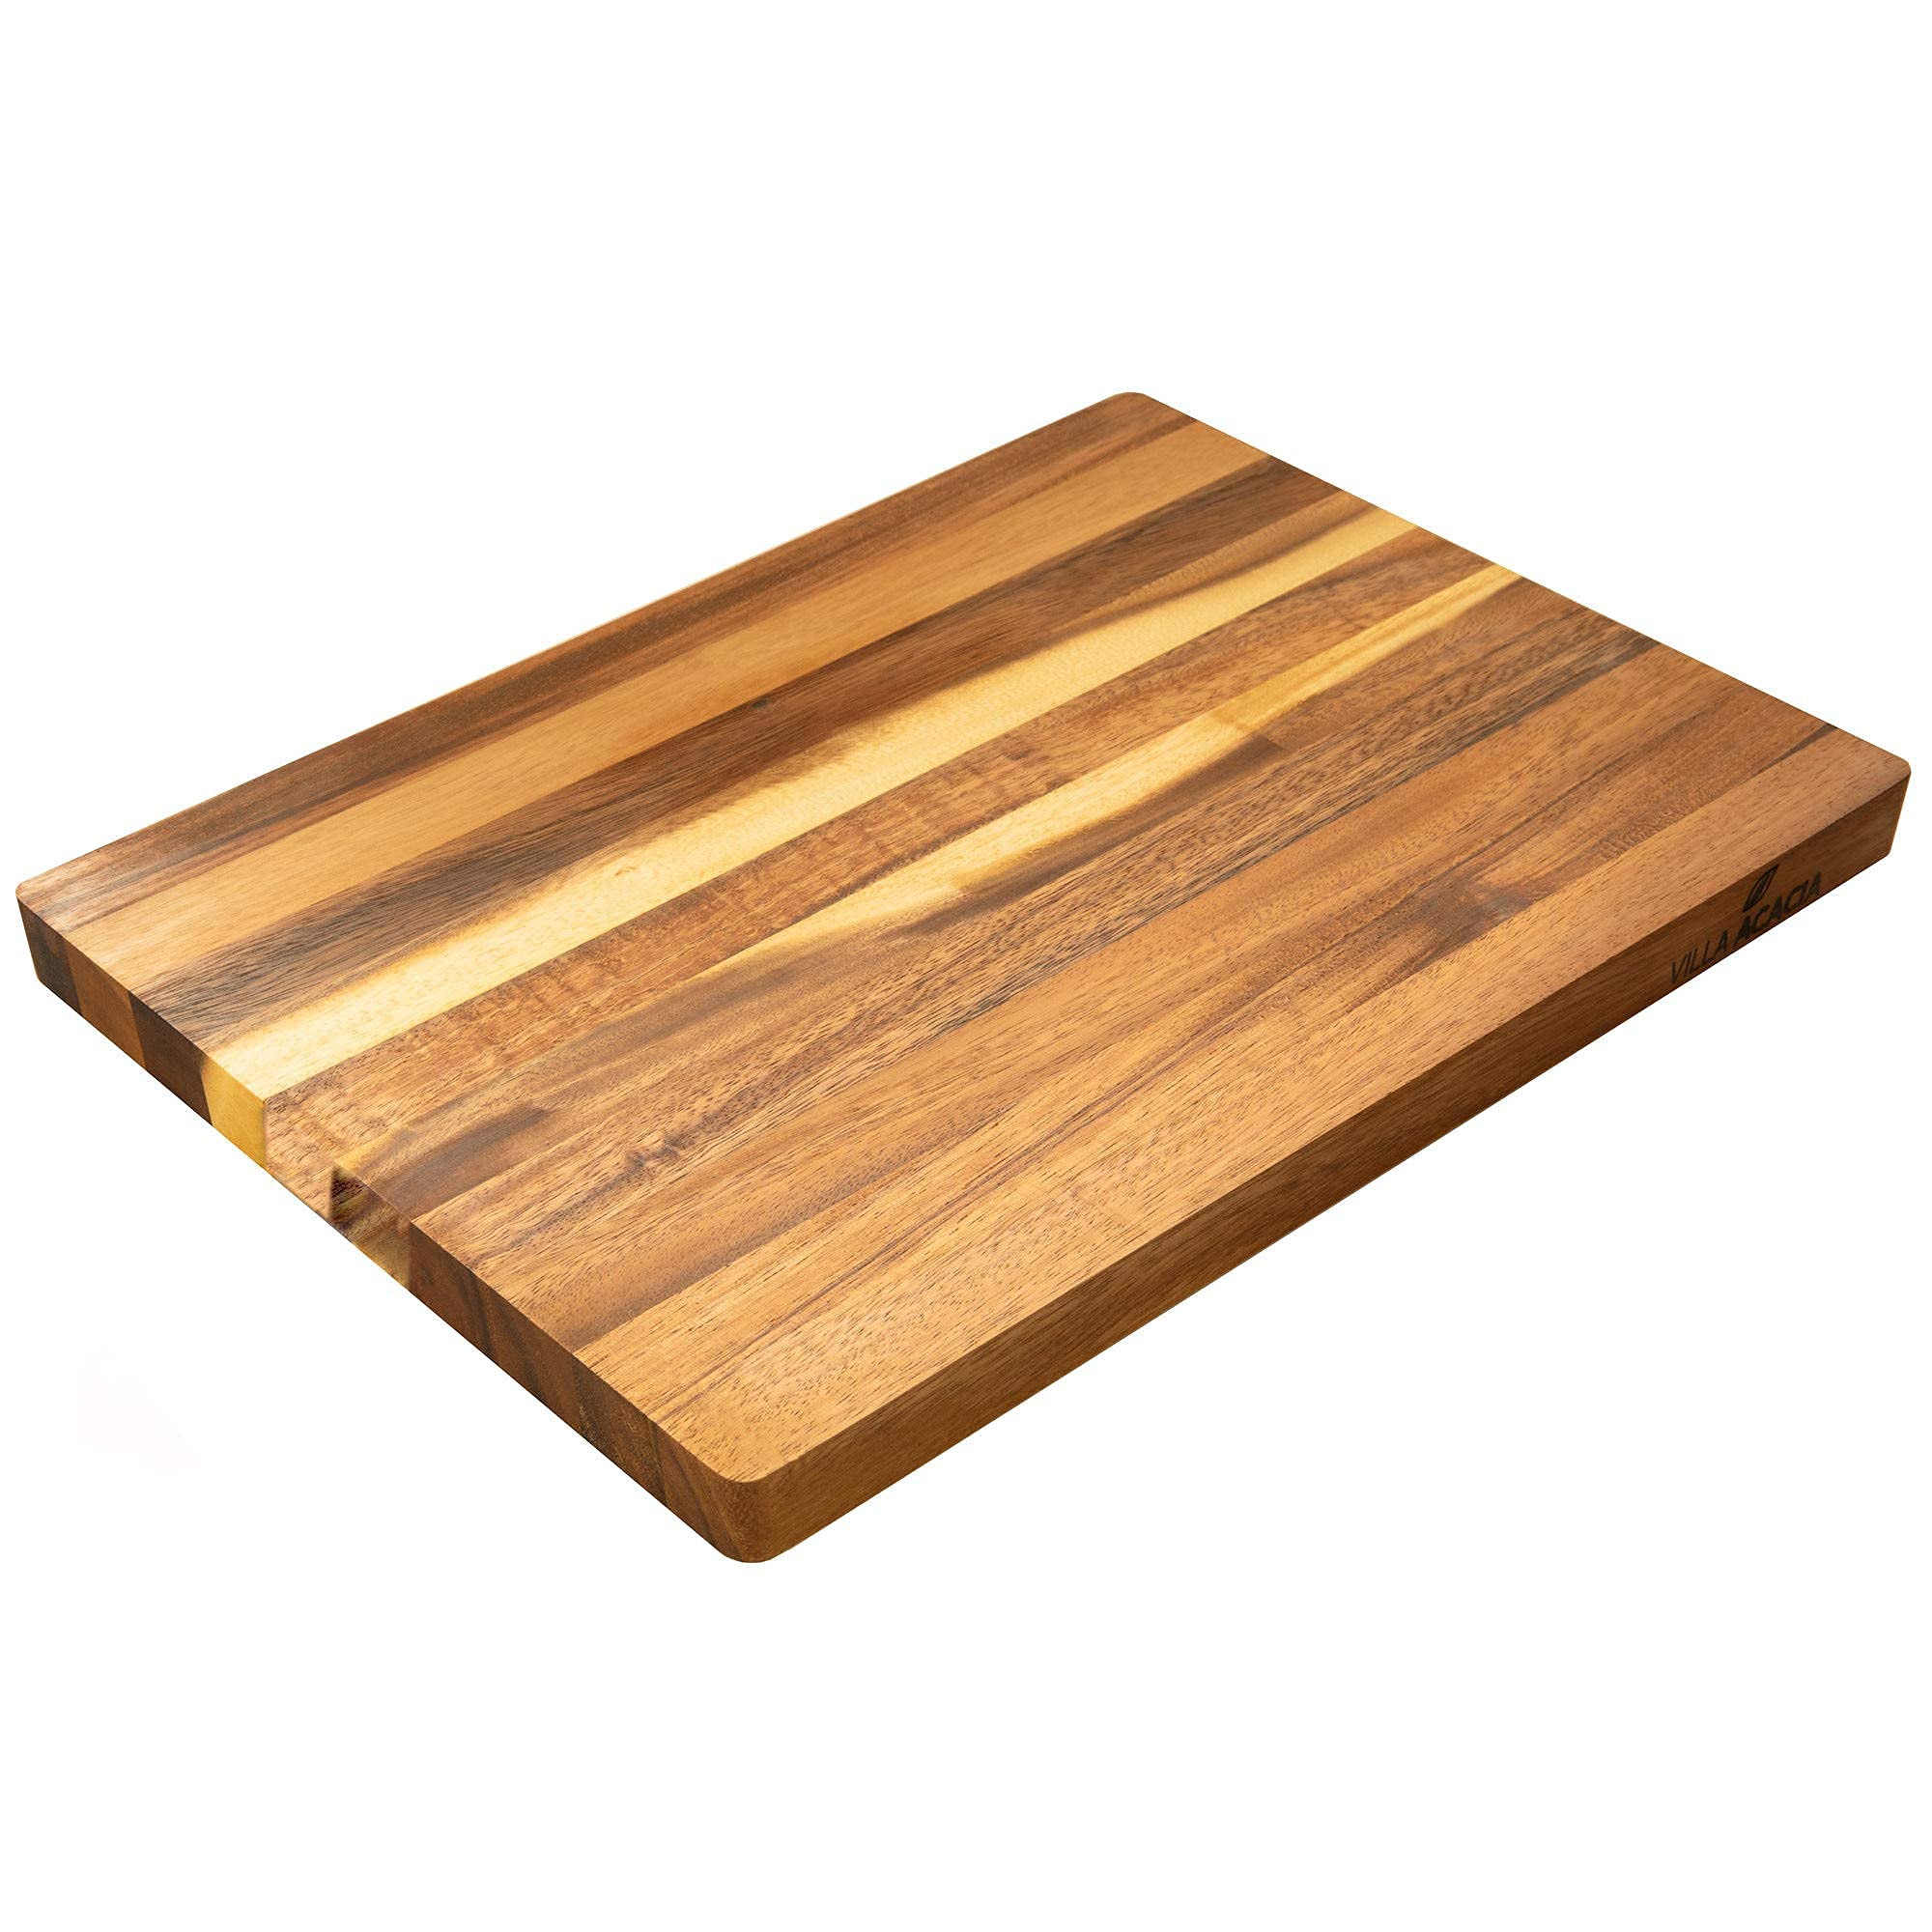 Shangrun 17 x 12 Inch Acacia Wood Chopping Board